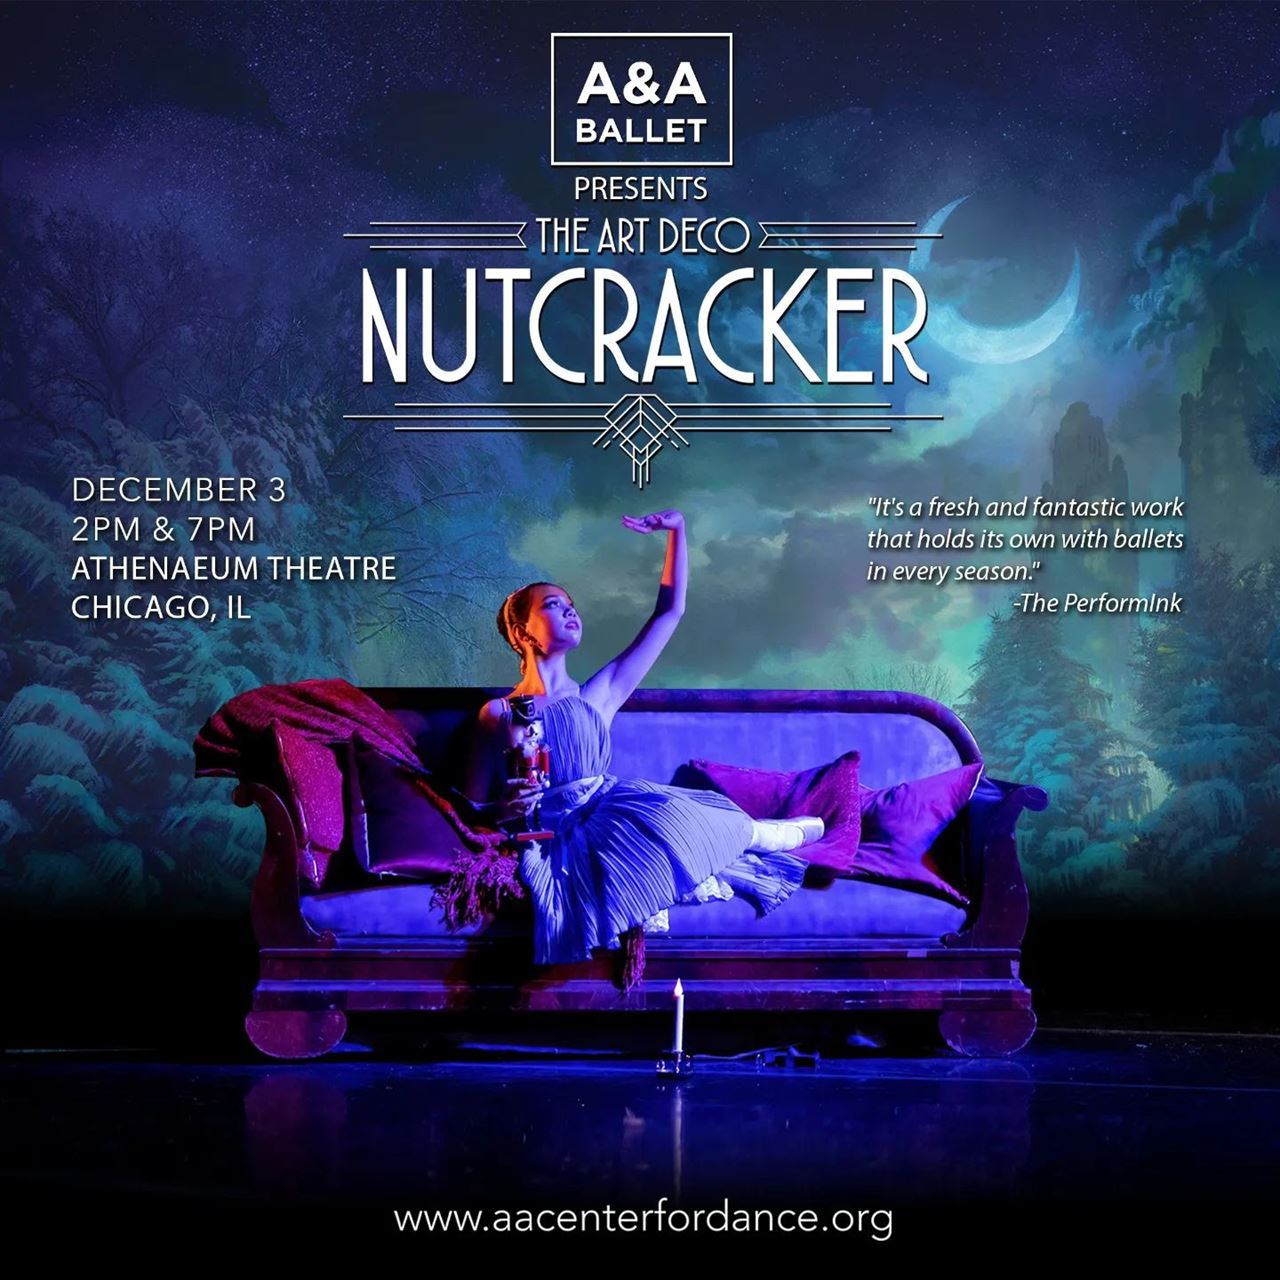 Promotional poster for The Art Deco Nutcracker